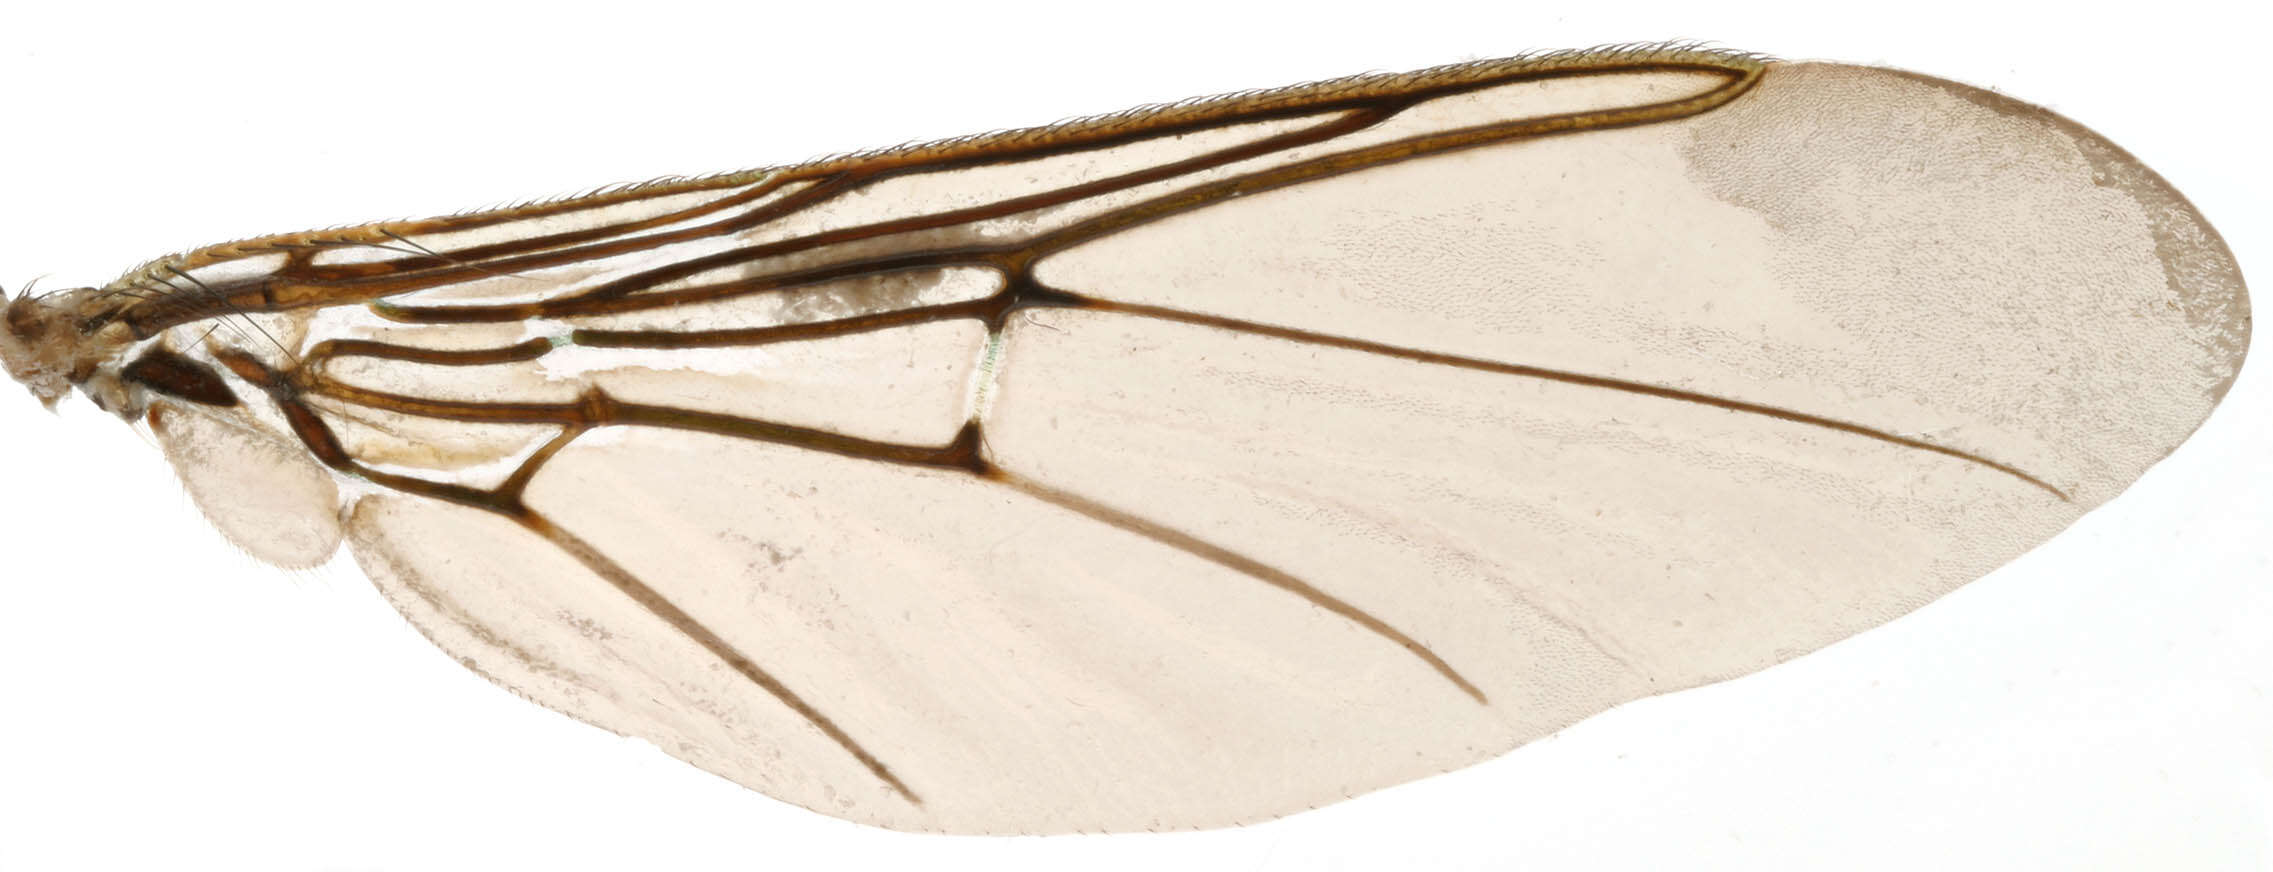 Image of Ornithomya avicularia (Linnaeus 1758)